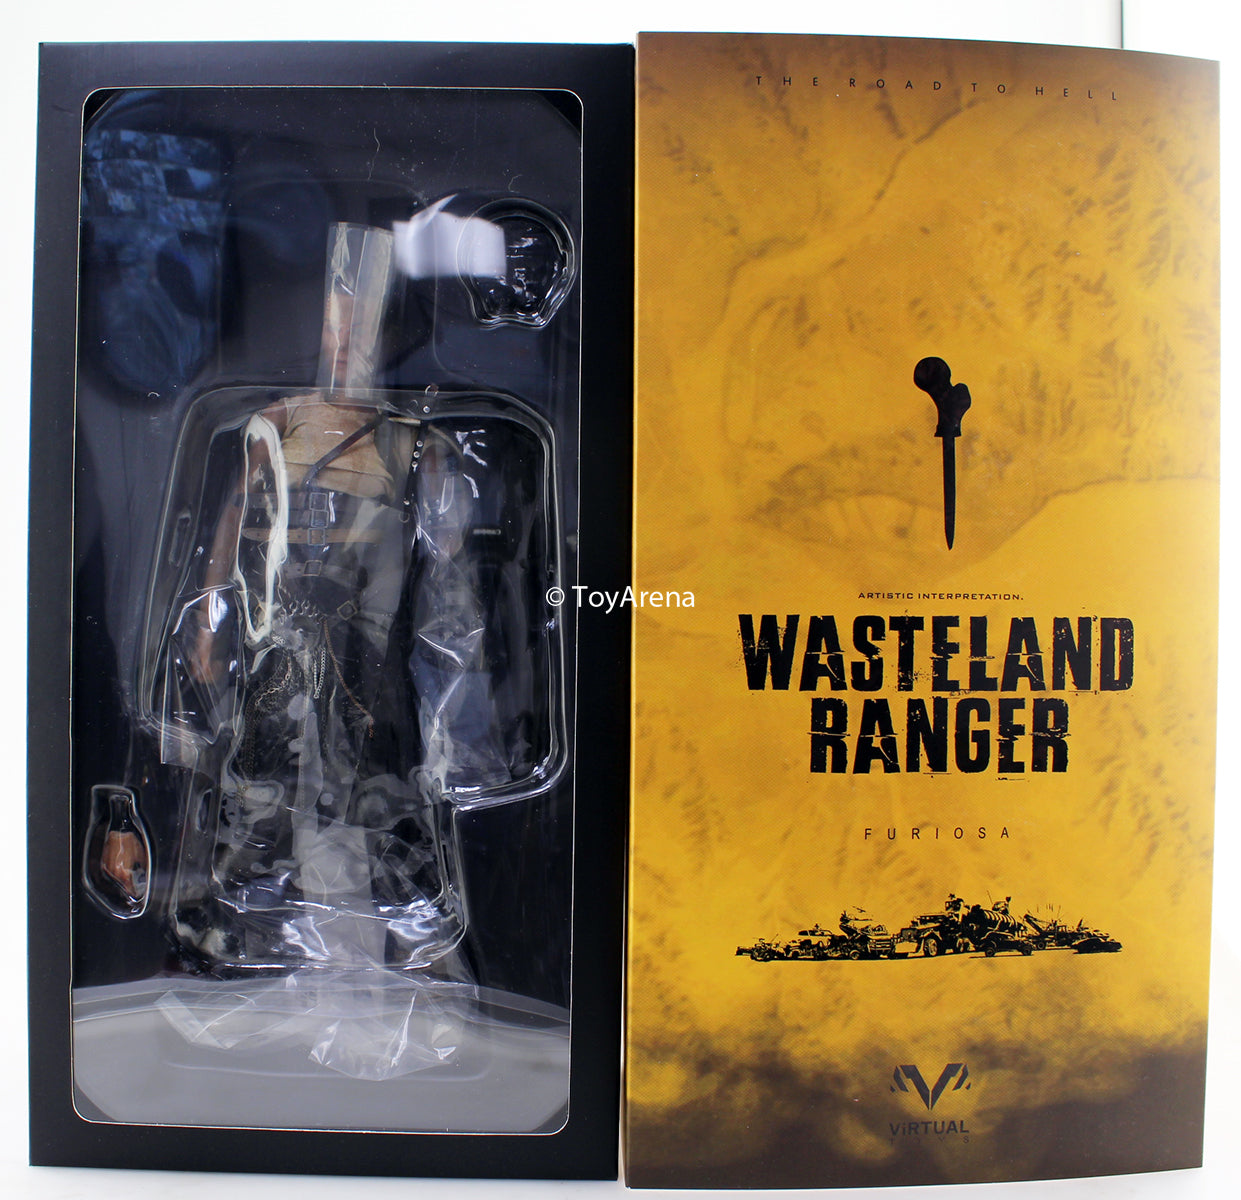 Virtual Toys (VTS) 1/6 VM-020 Wasteland Ranger Furiosa Action Figure